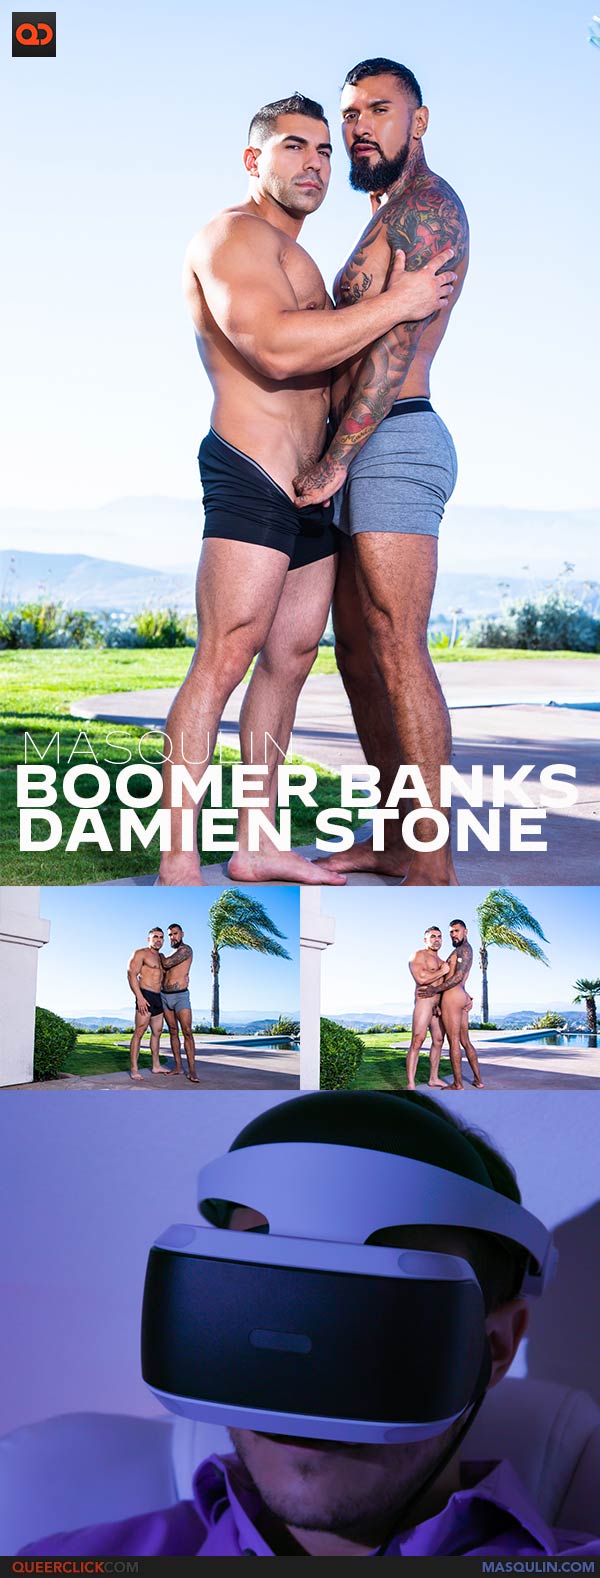 Masqulin: Damien Stone and Boomer Banks